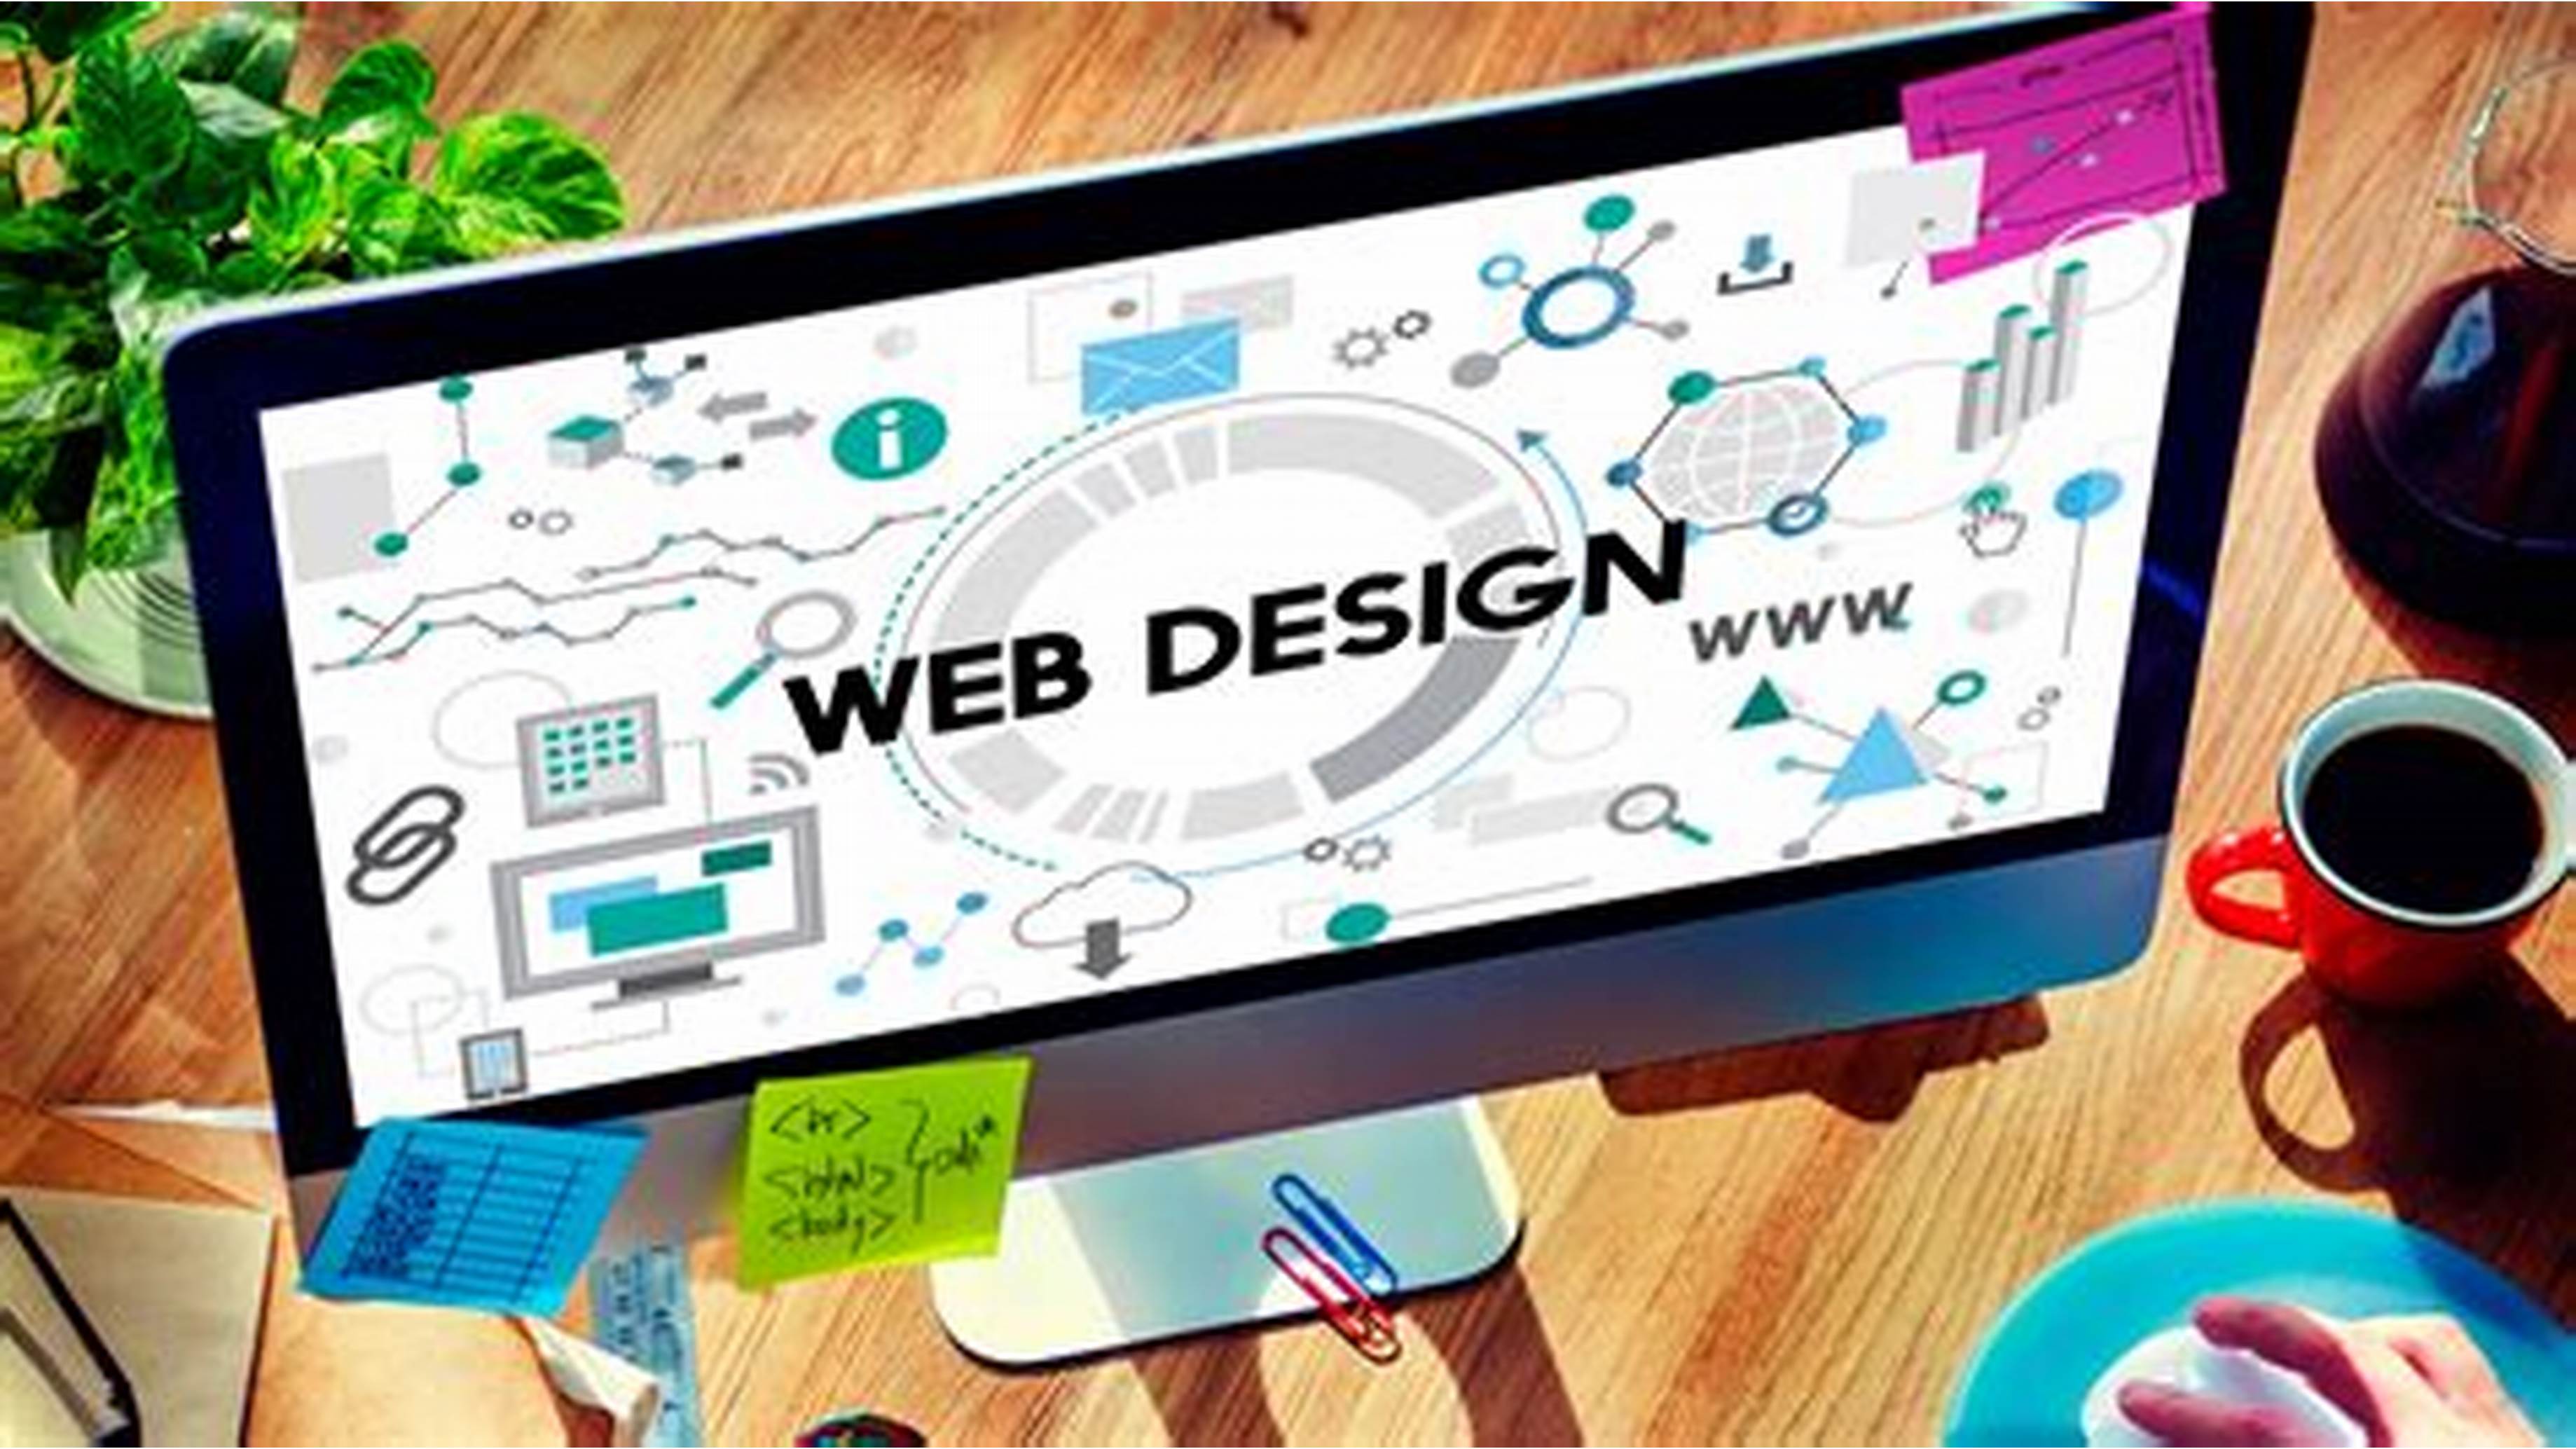  web-designer-job-duties